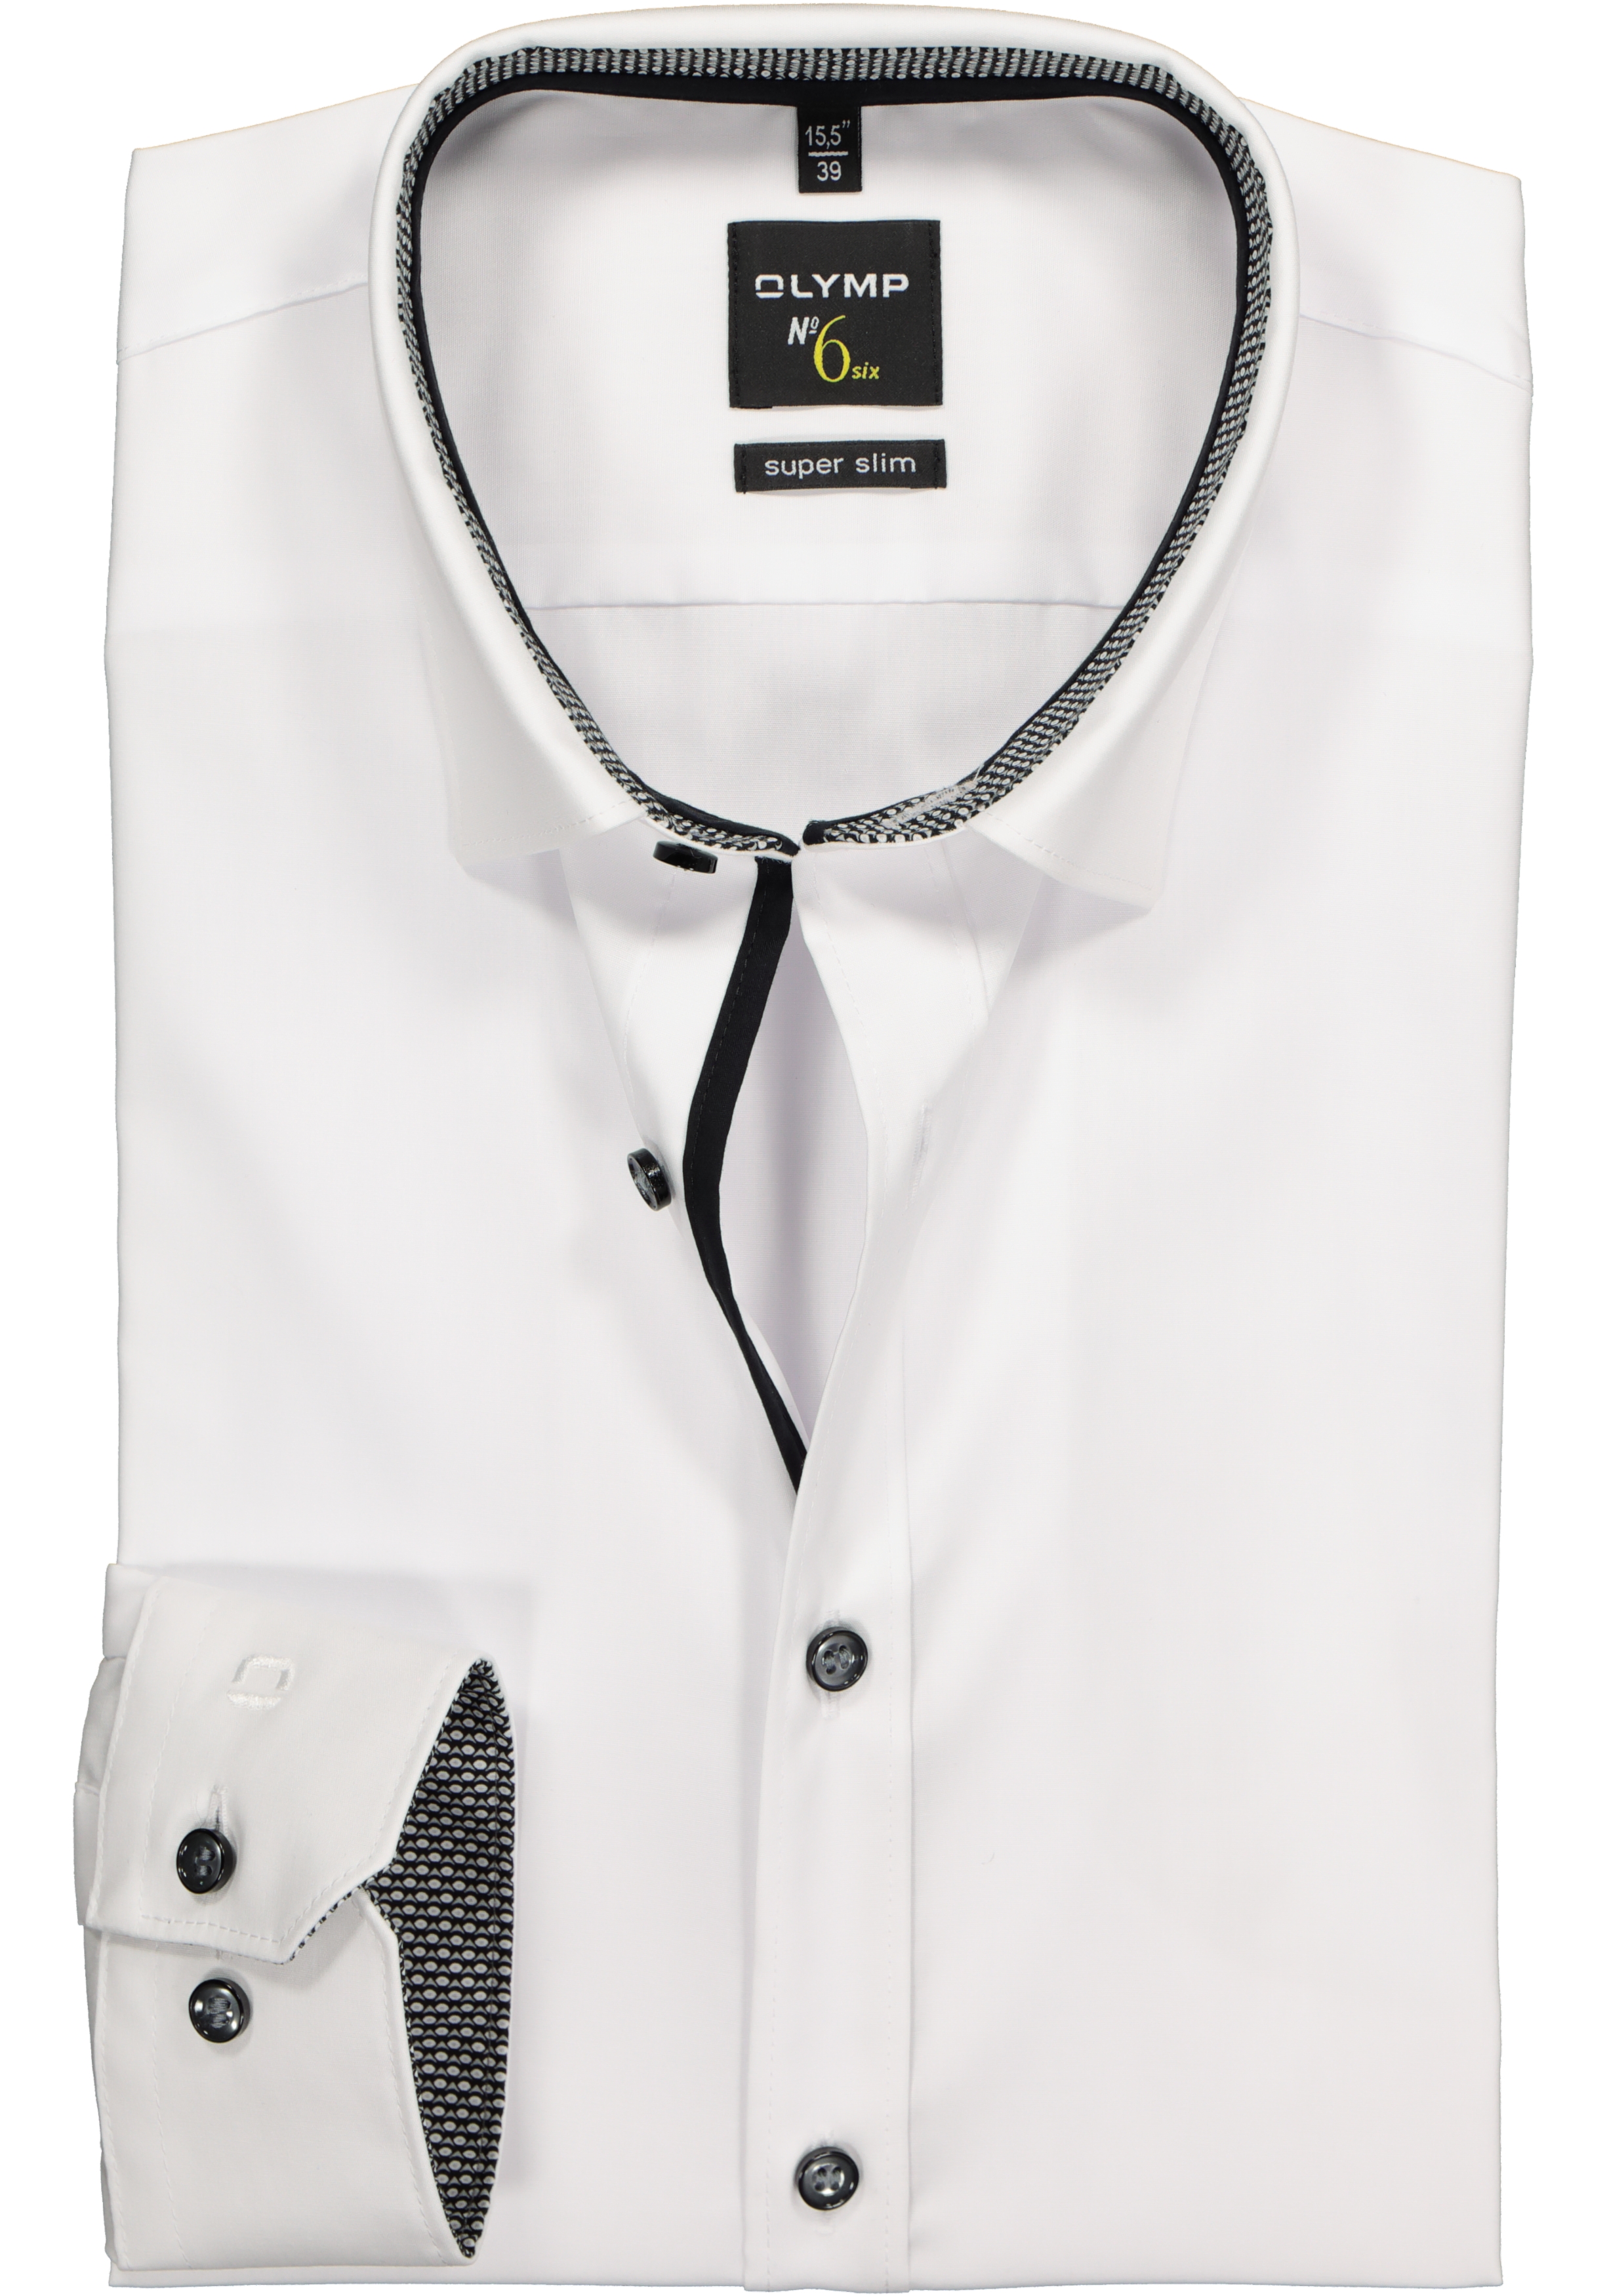 OLYMP No. Six super slim overhemd, wit (zwart contrast) - Zomer tot korting